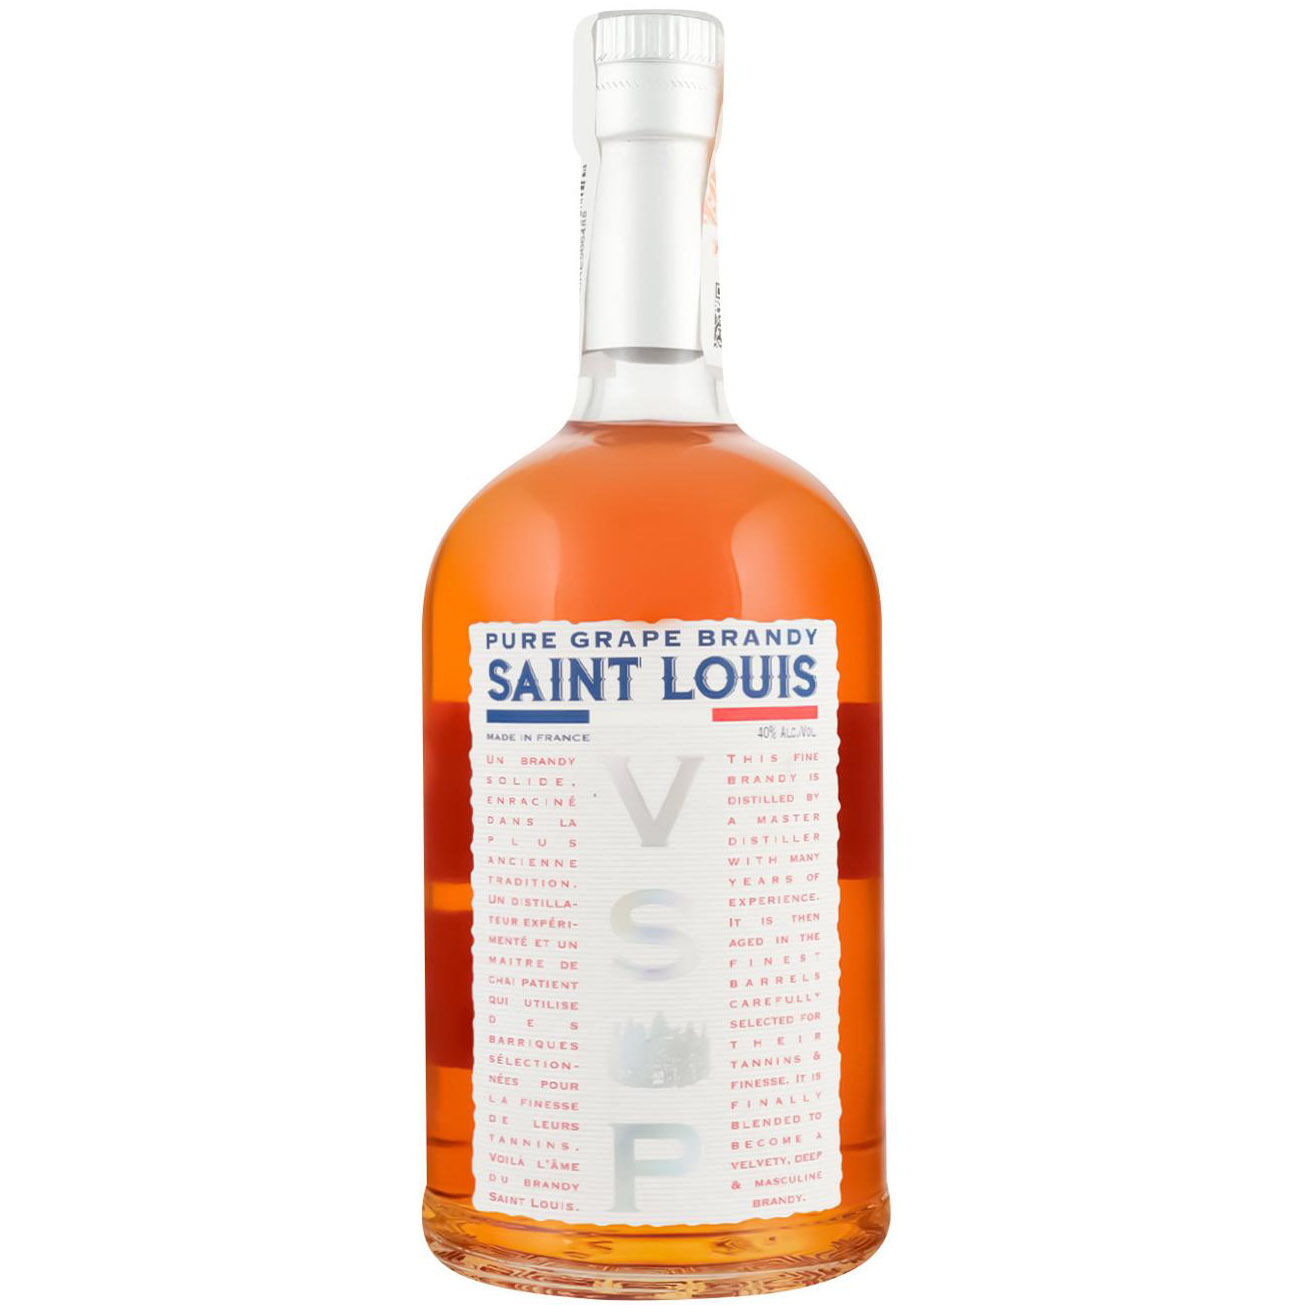 Бренди Godet Saint Louis Pure Grape Brandy VSOP 40% 0.7 л - фото 1